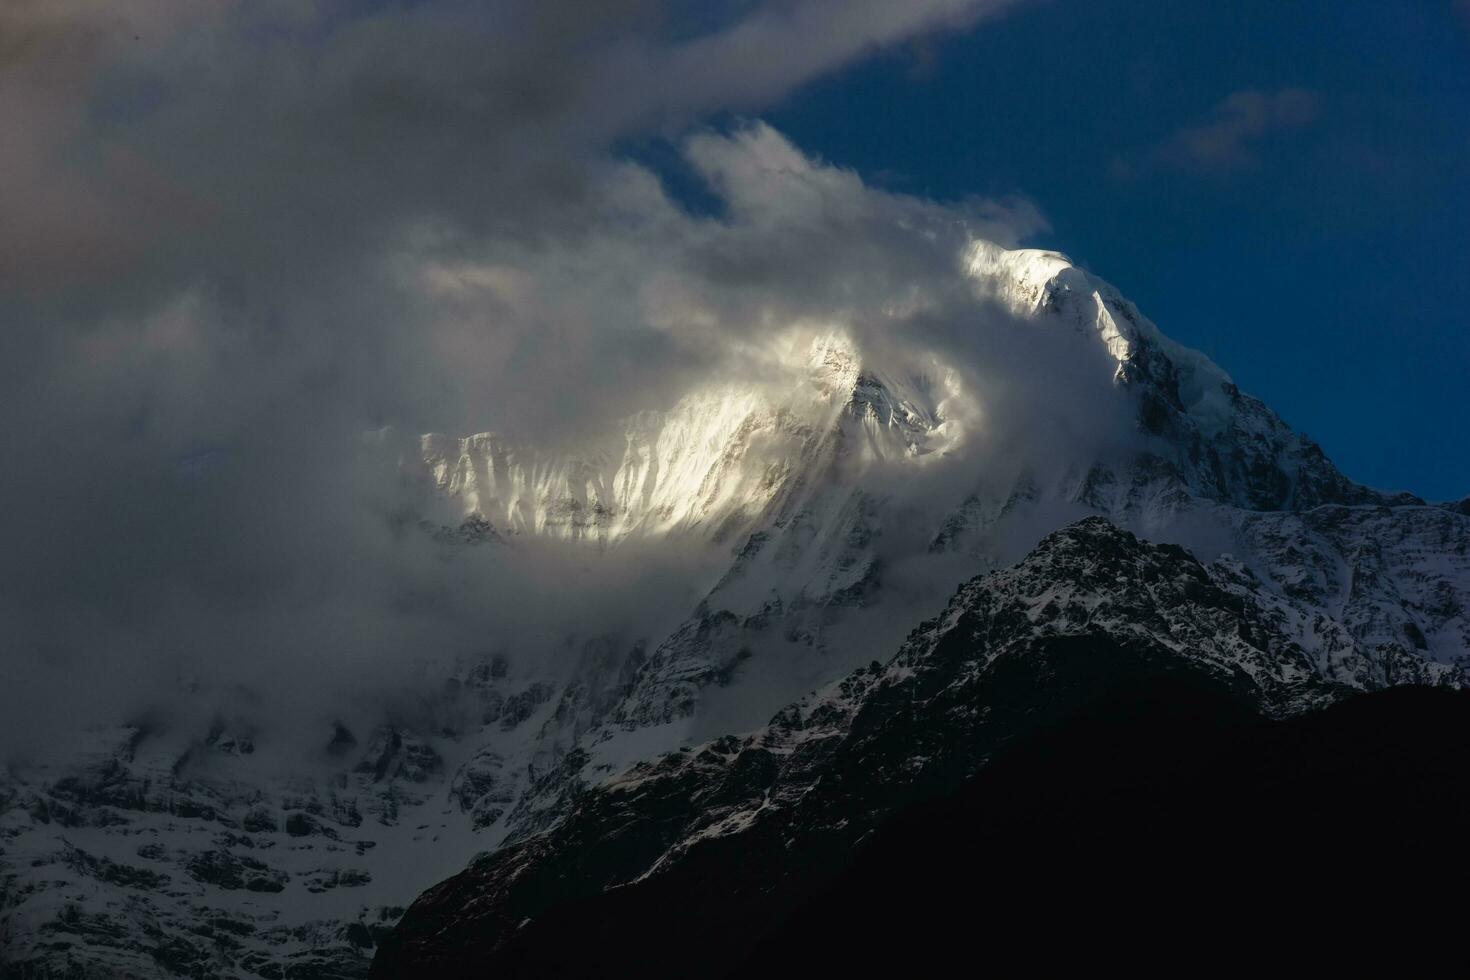 Tormentoso clima en un nieve tapado montaña pico en Nepal. foto